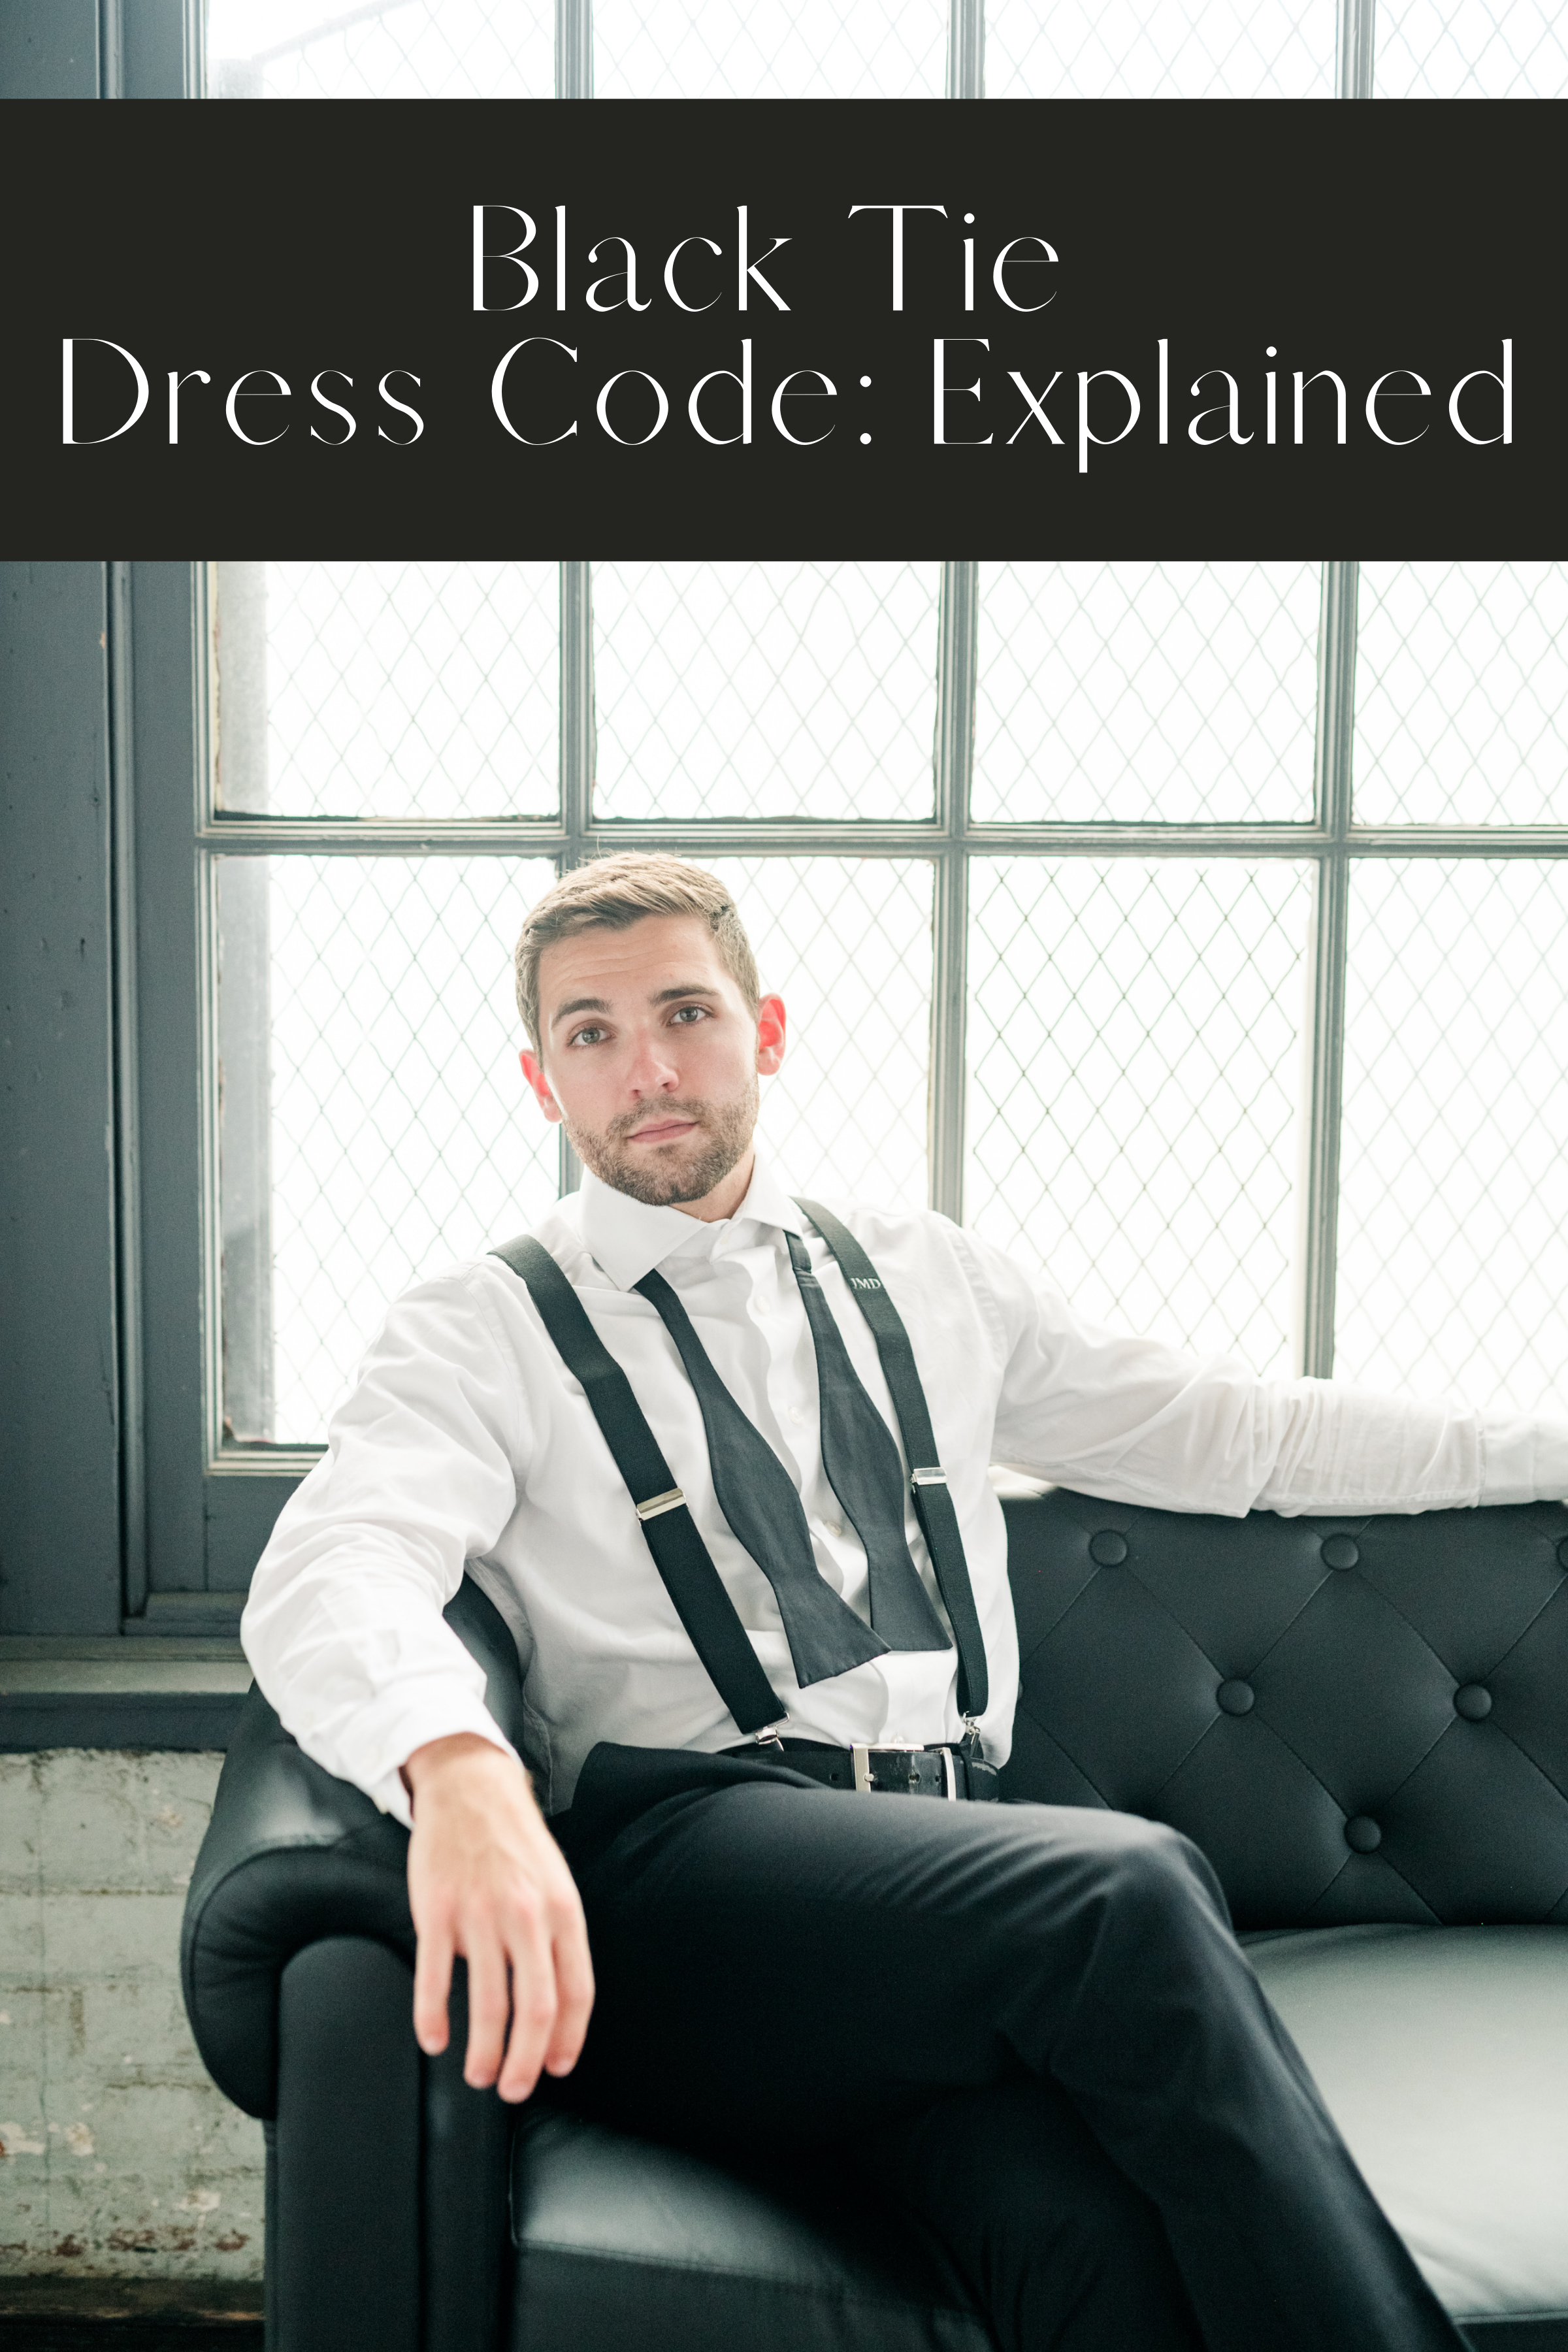 Black tie dress code 